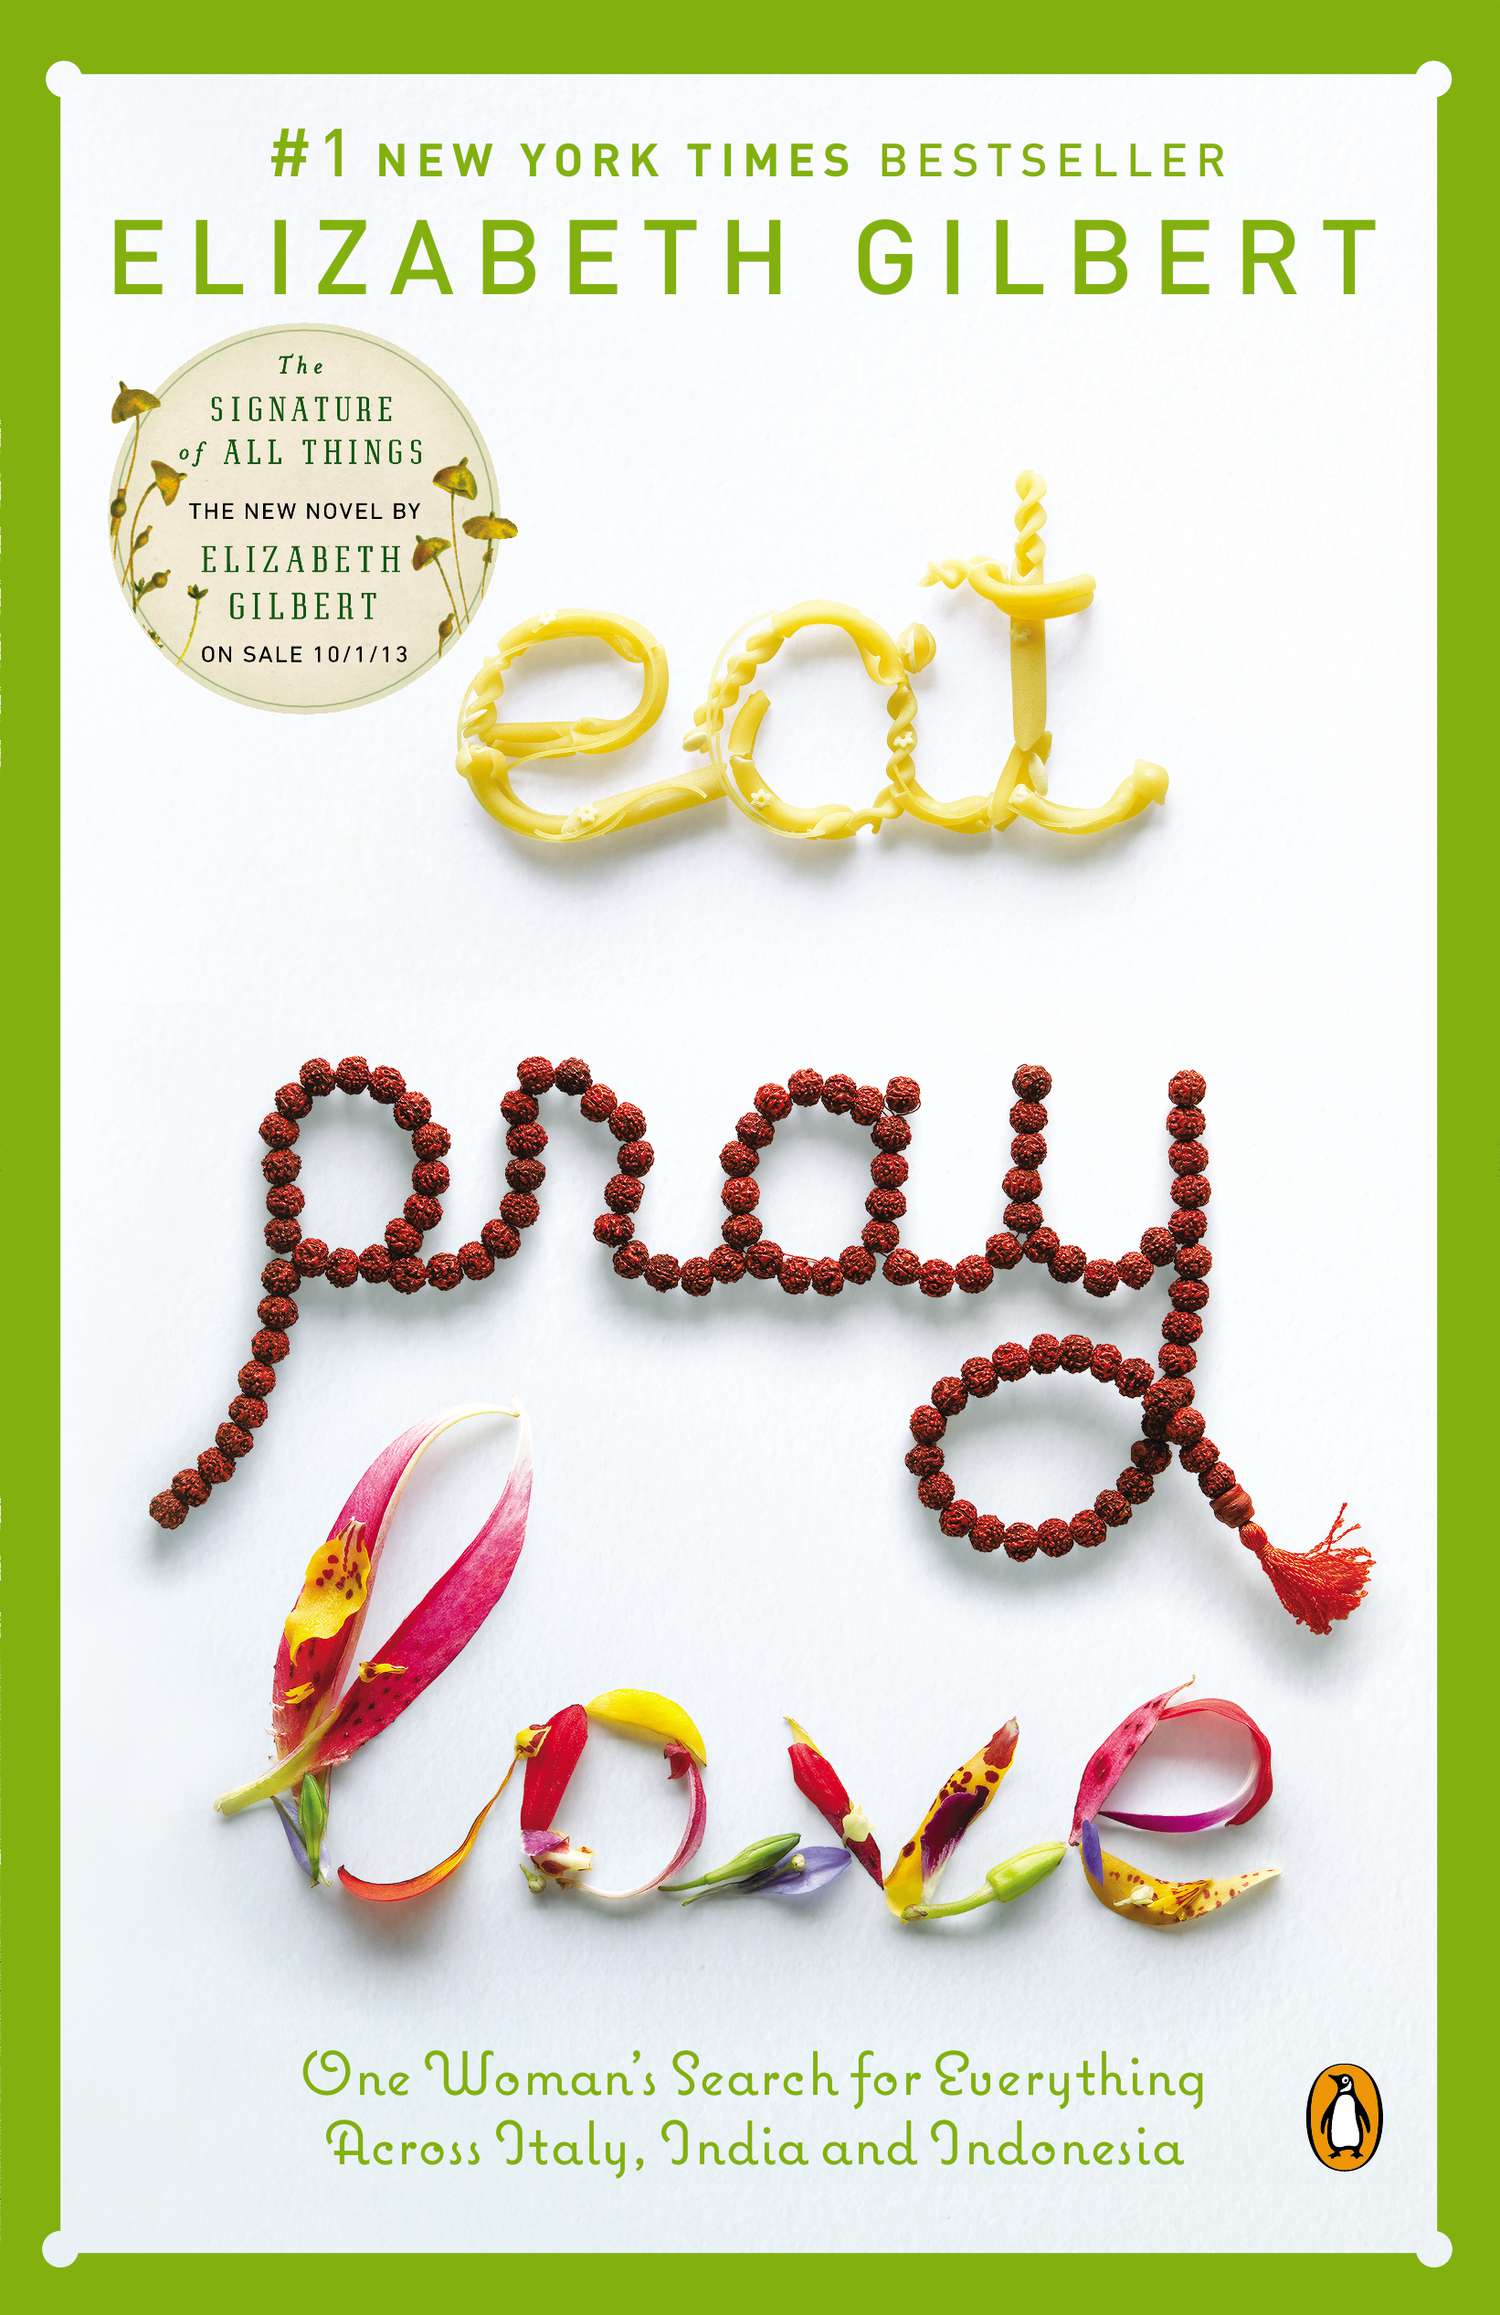 Eat Pray Love. Official Website for Best Selling Author Elizabeth